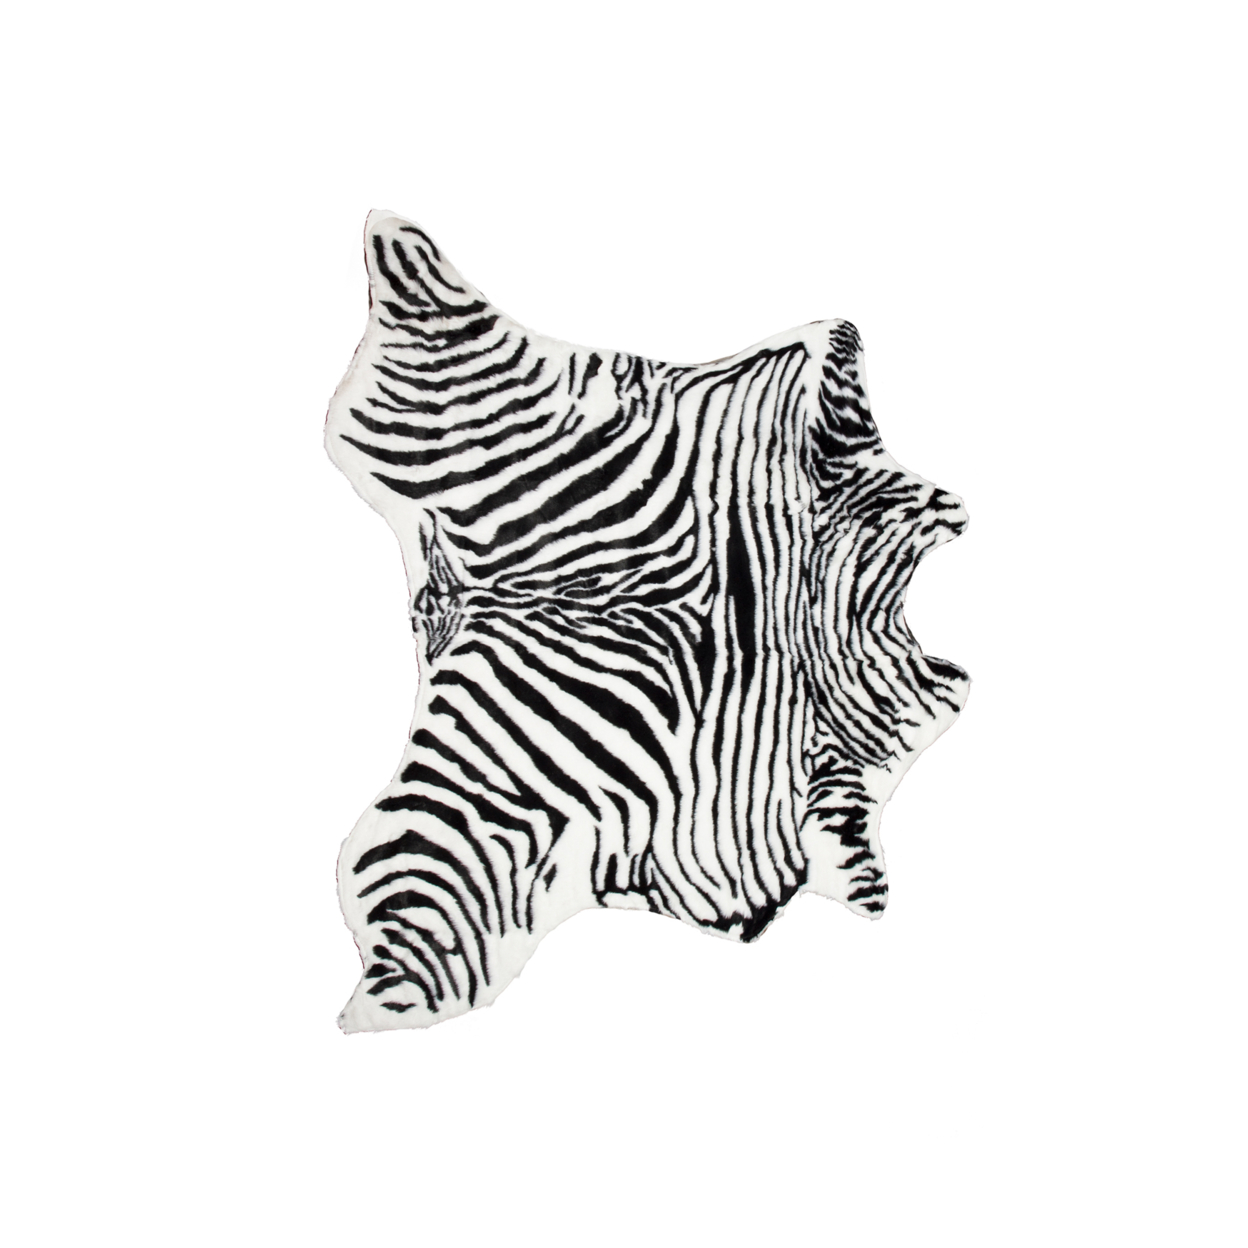 Faux Cowhide Rug/Throw 4 1/4"x5' Zebra Black White